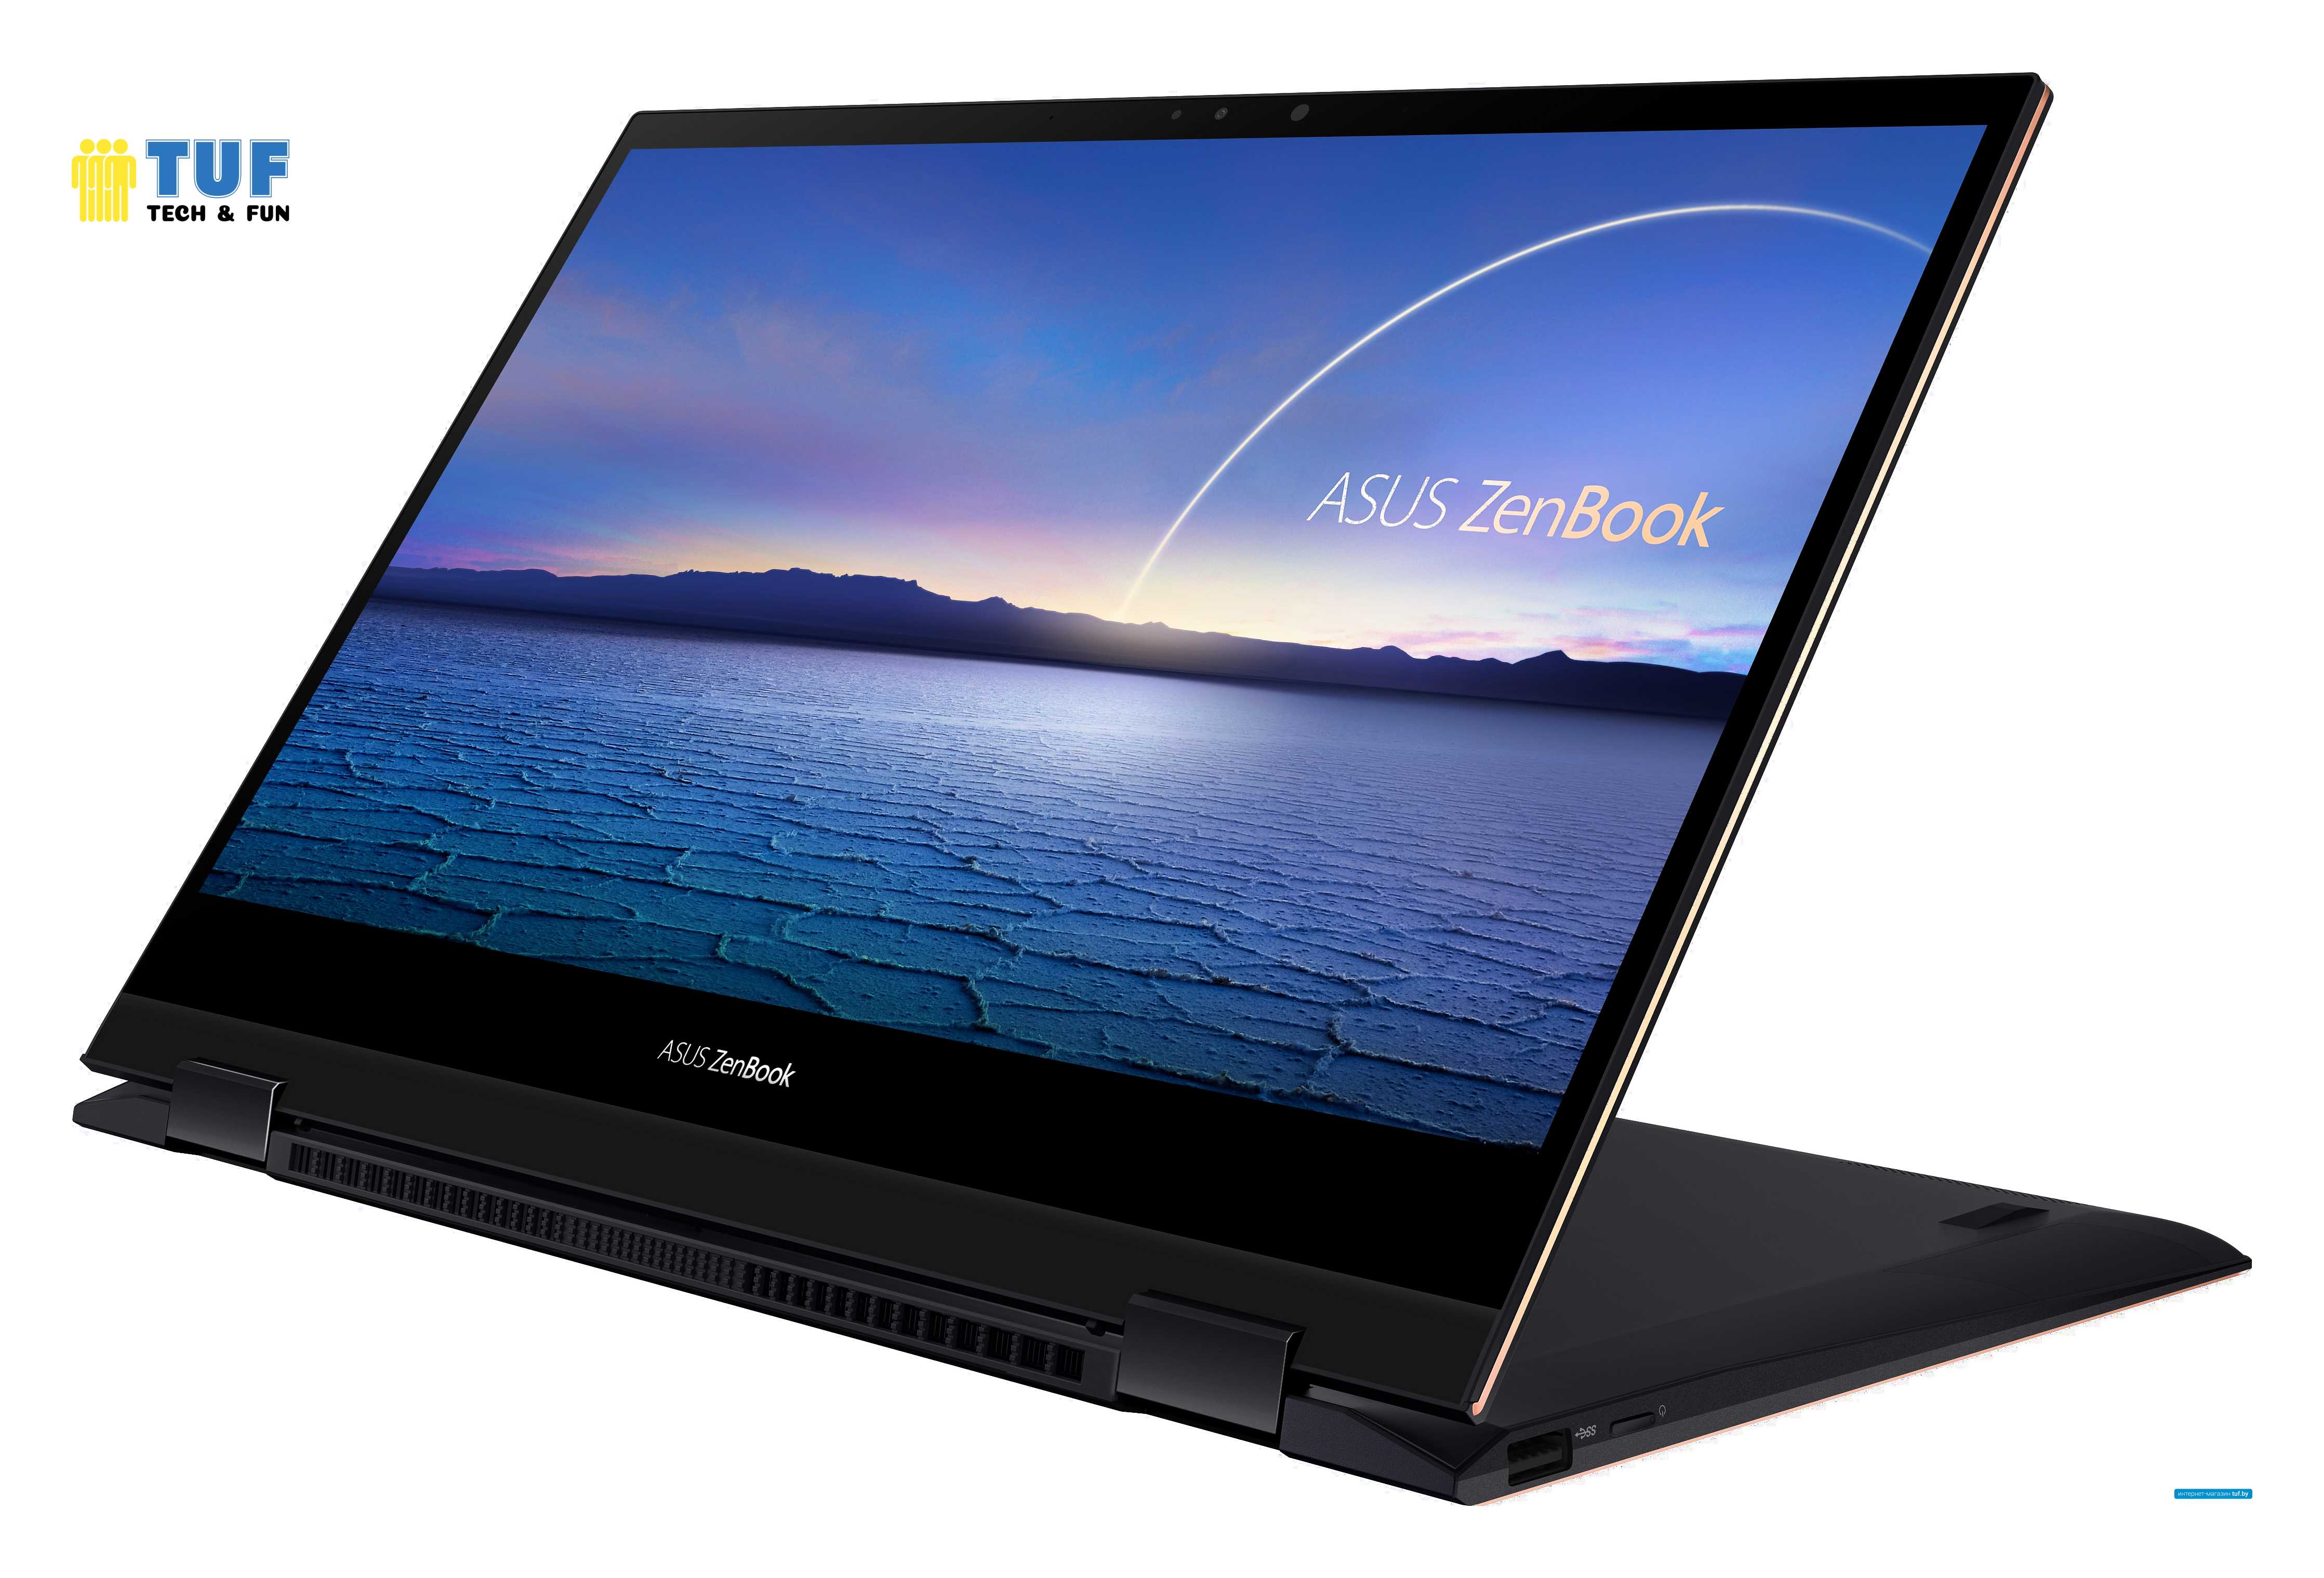 Ноутбук 2-в-1 ASUS ZenBook Flip S UX371EA-HL144T